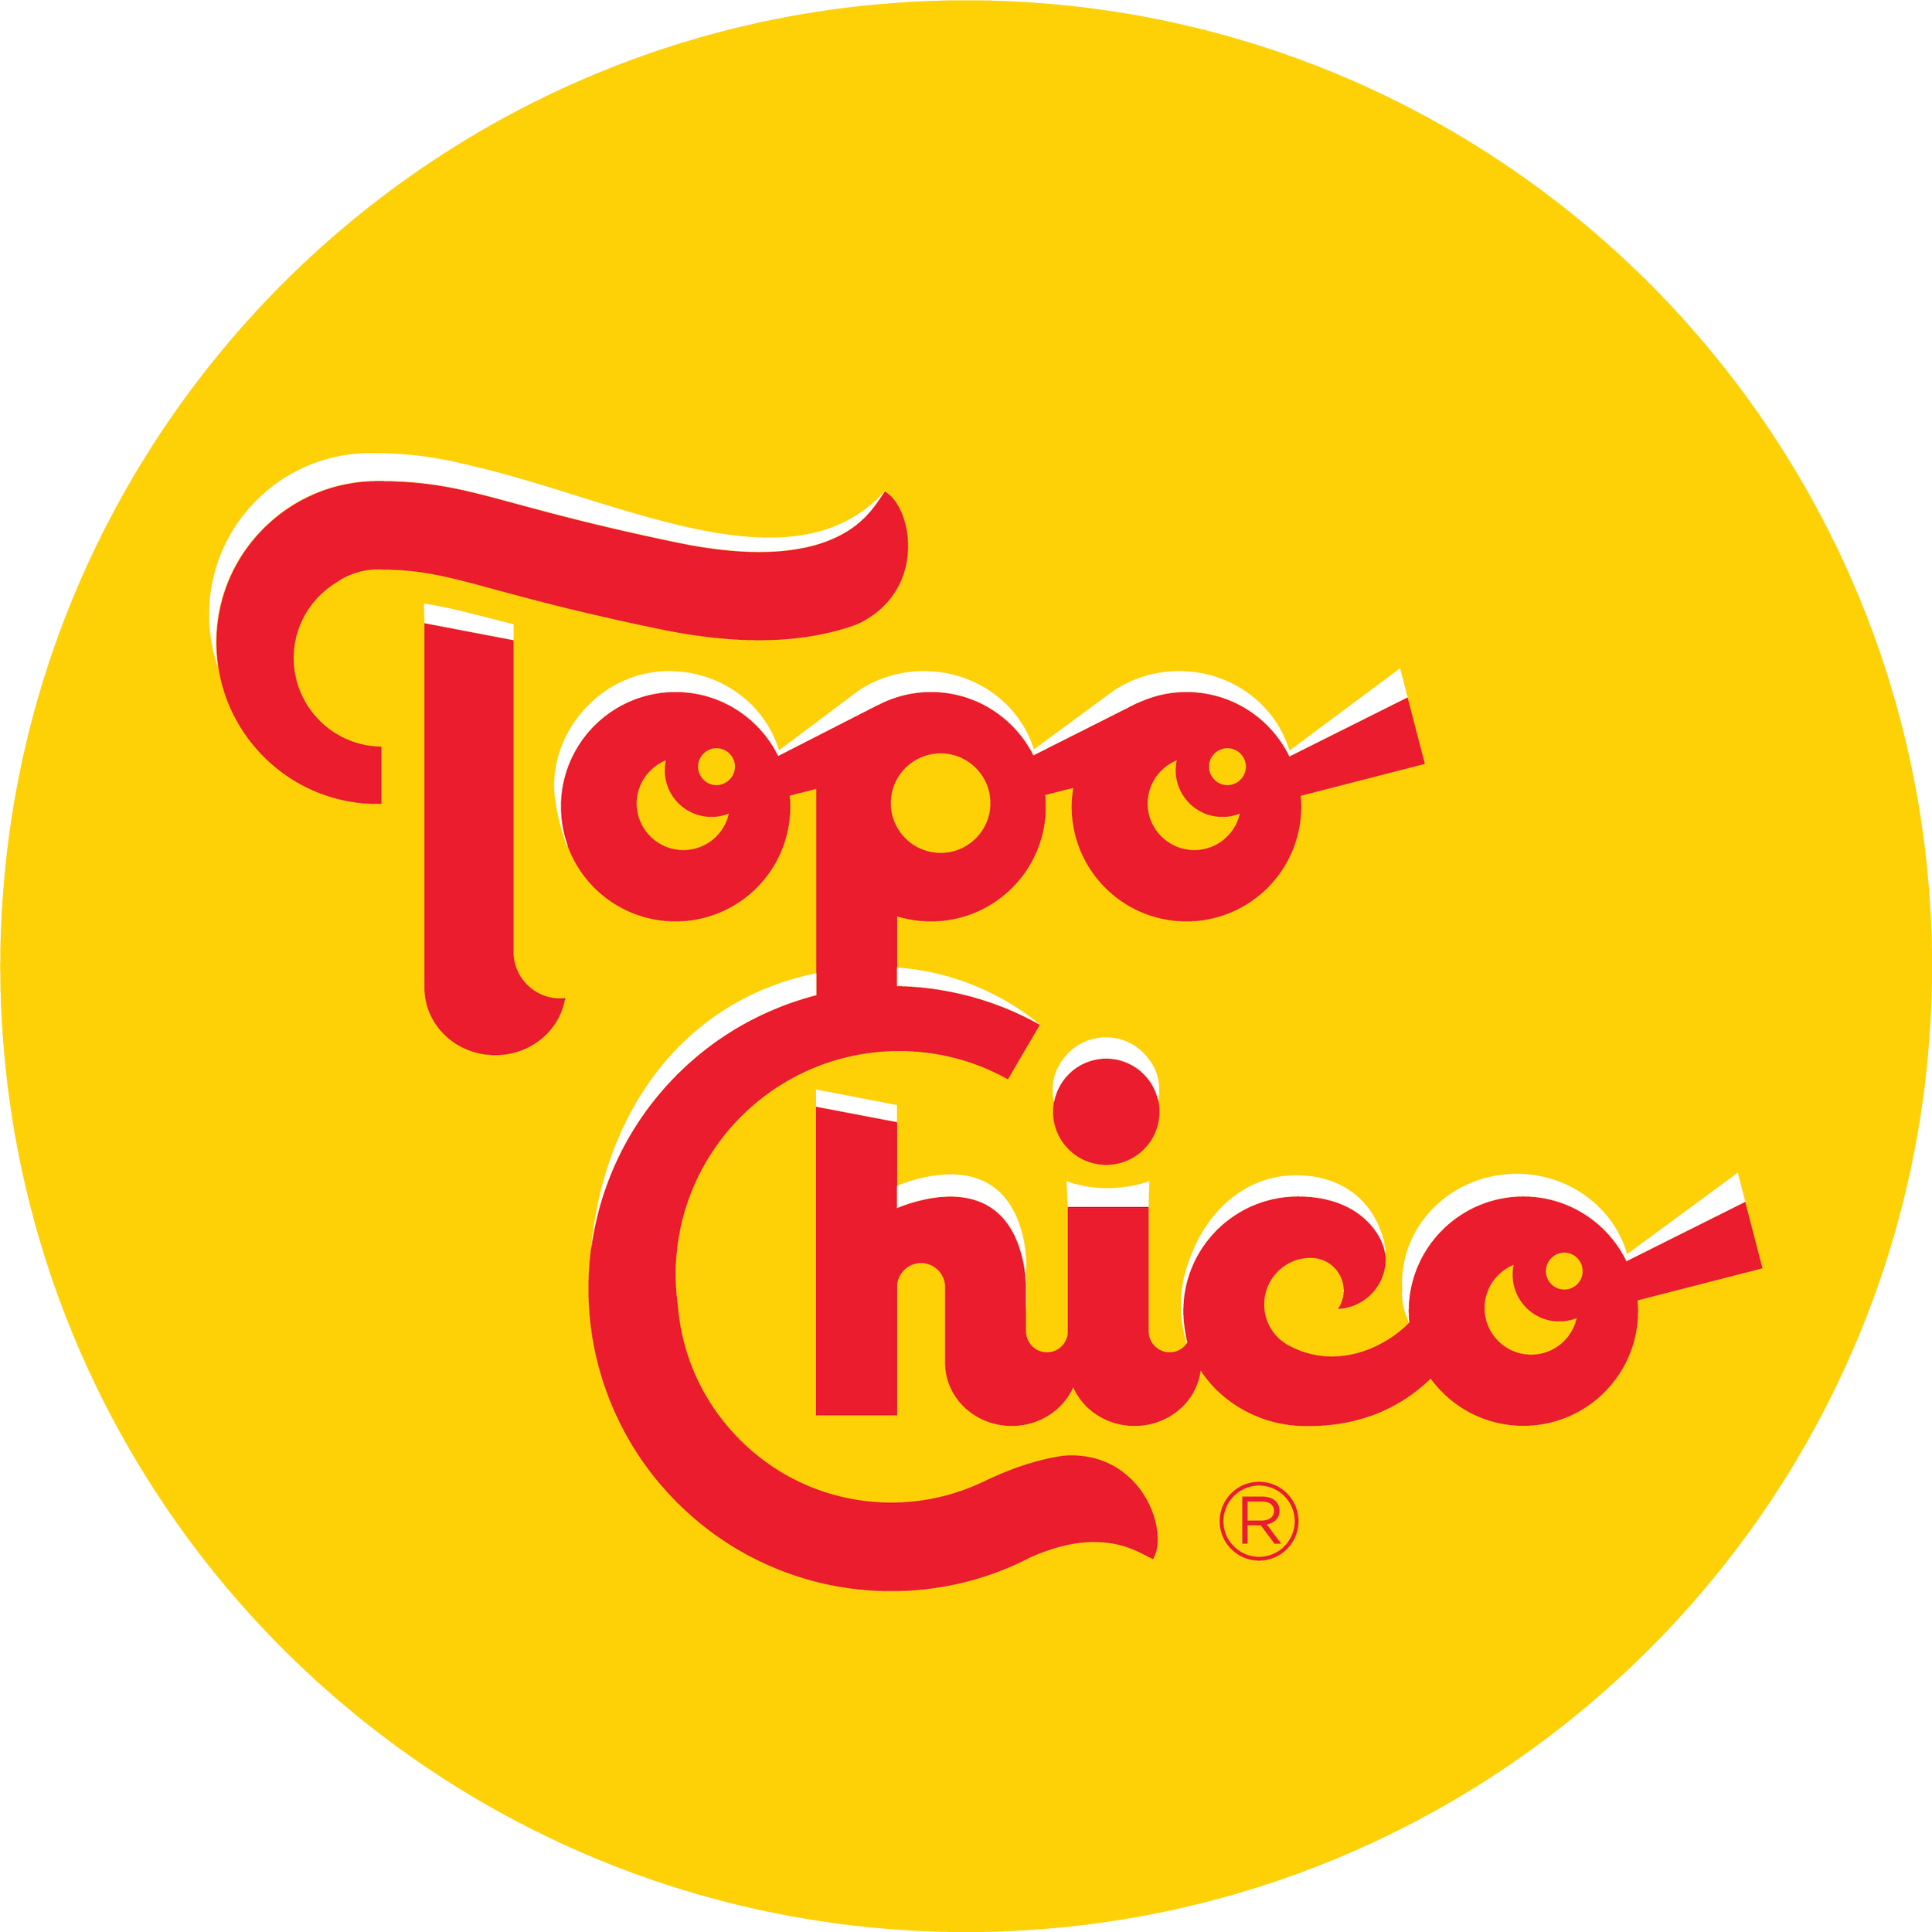 Topo Chico Circulo.png